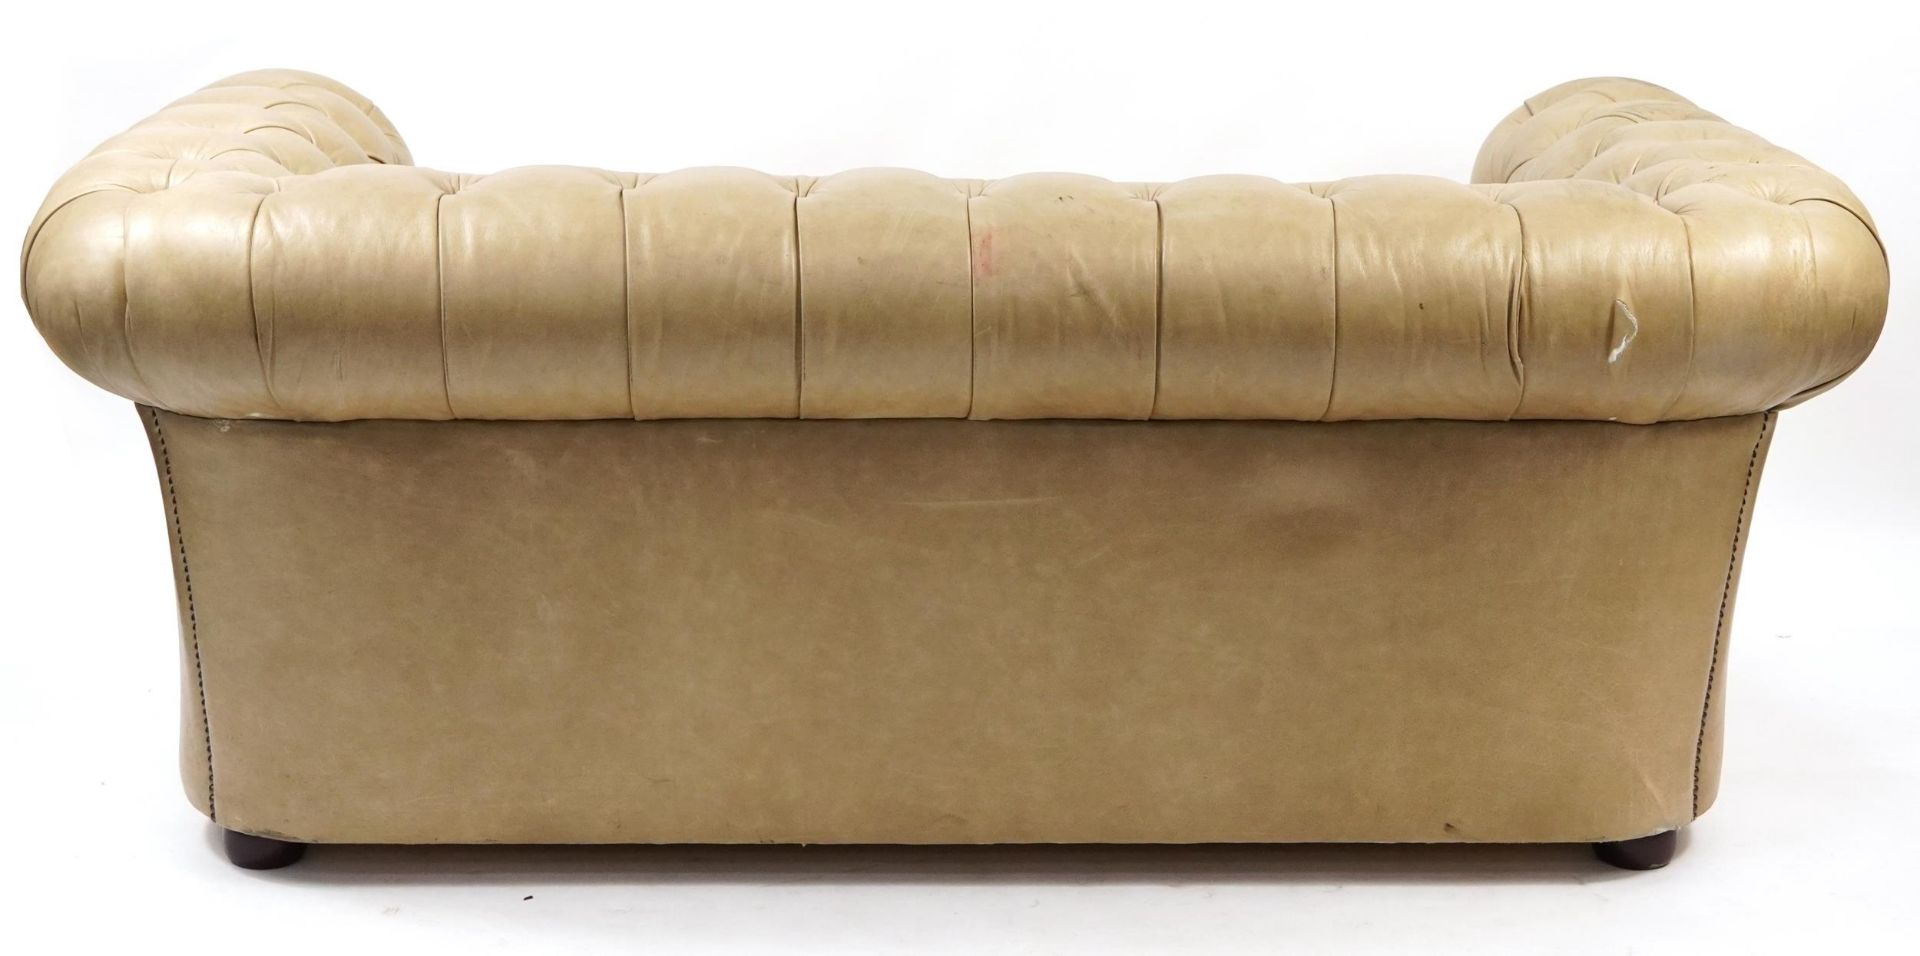 Three seater leather Chesterfield settee, 190cm wide - Bild 2 aus 2